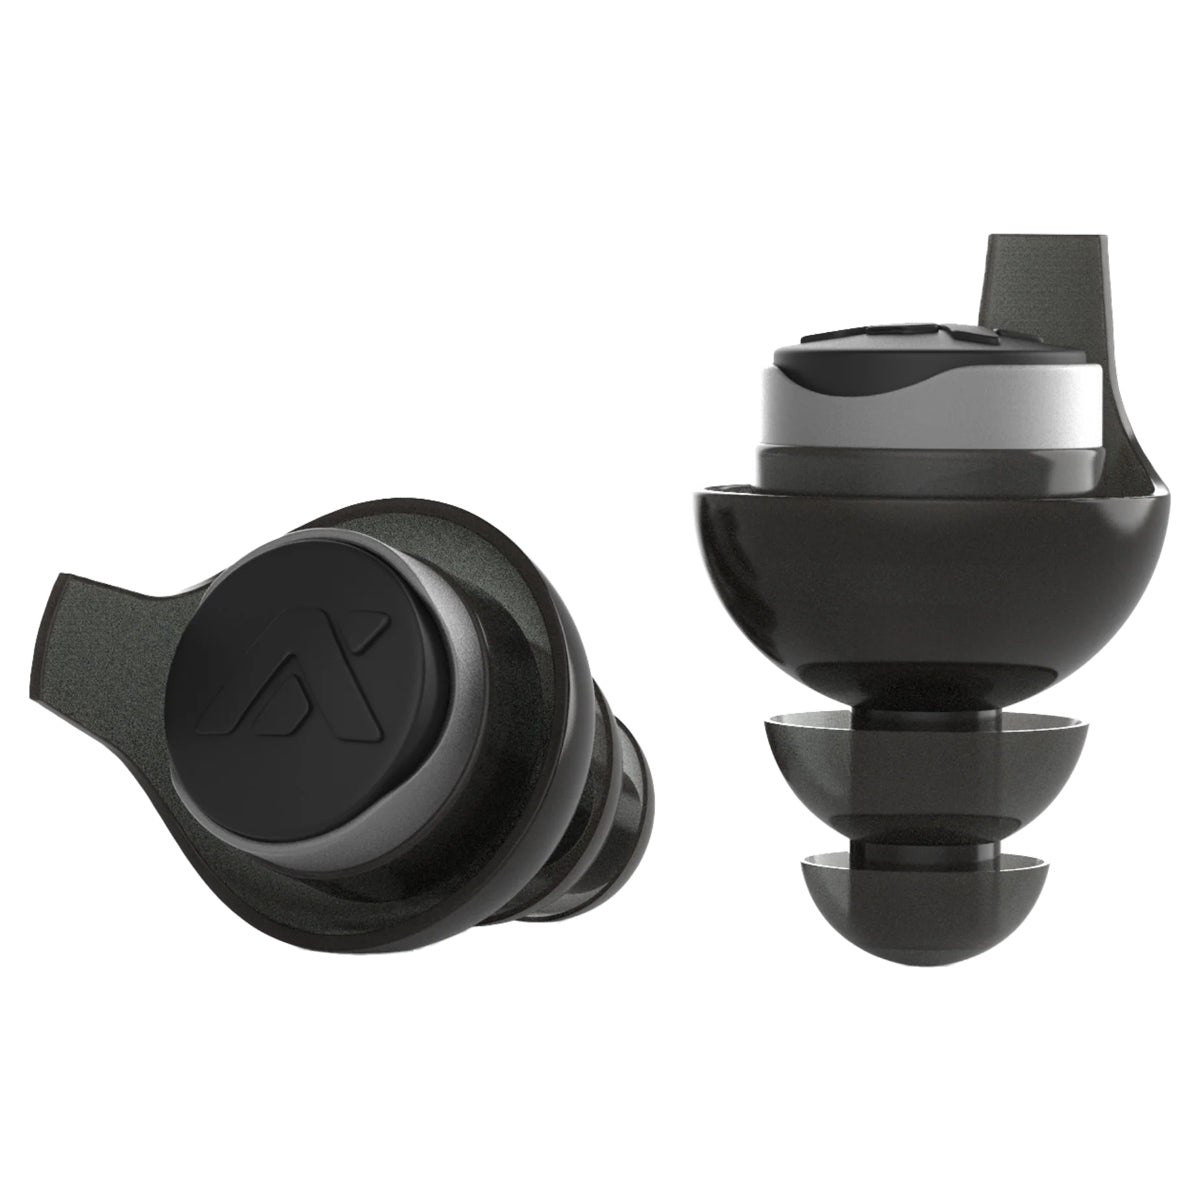 Axil XP Defender Ear Plugs in Smoke by GOHUNT | Axil - GOHUNT Shop